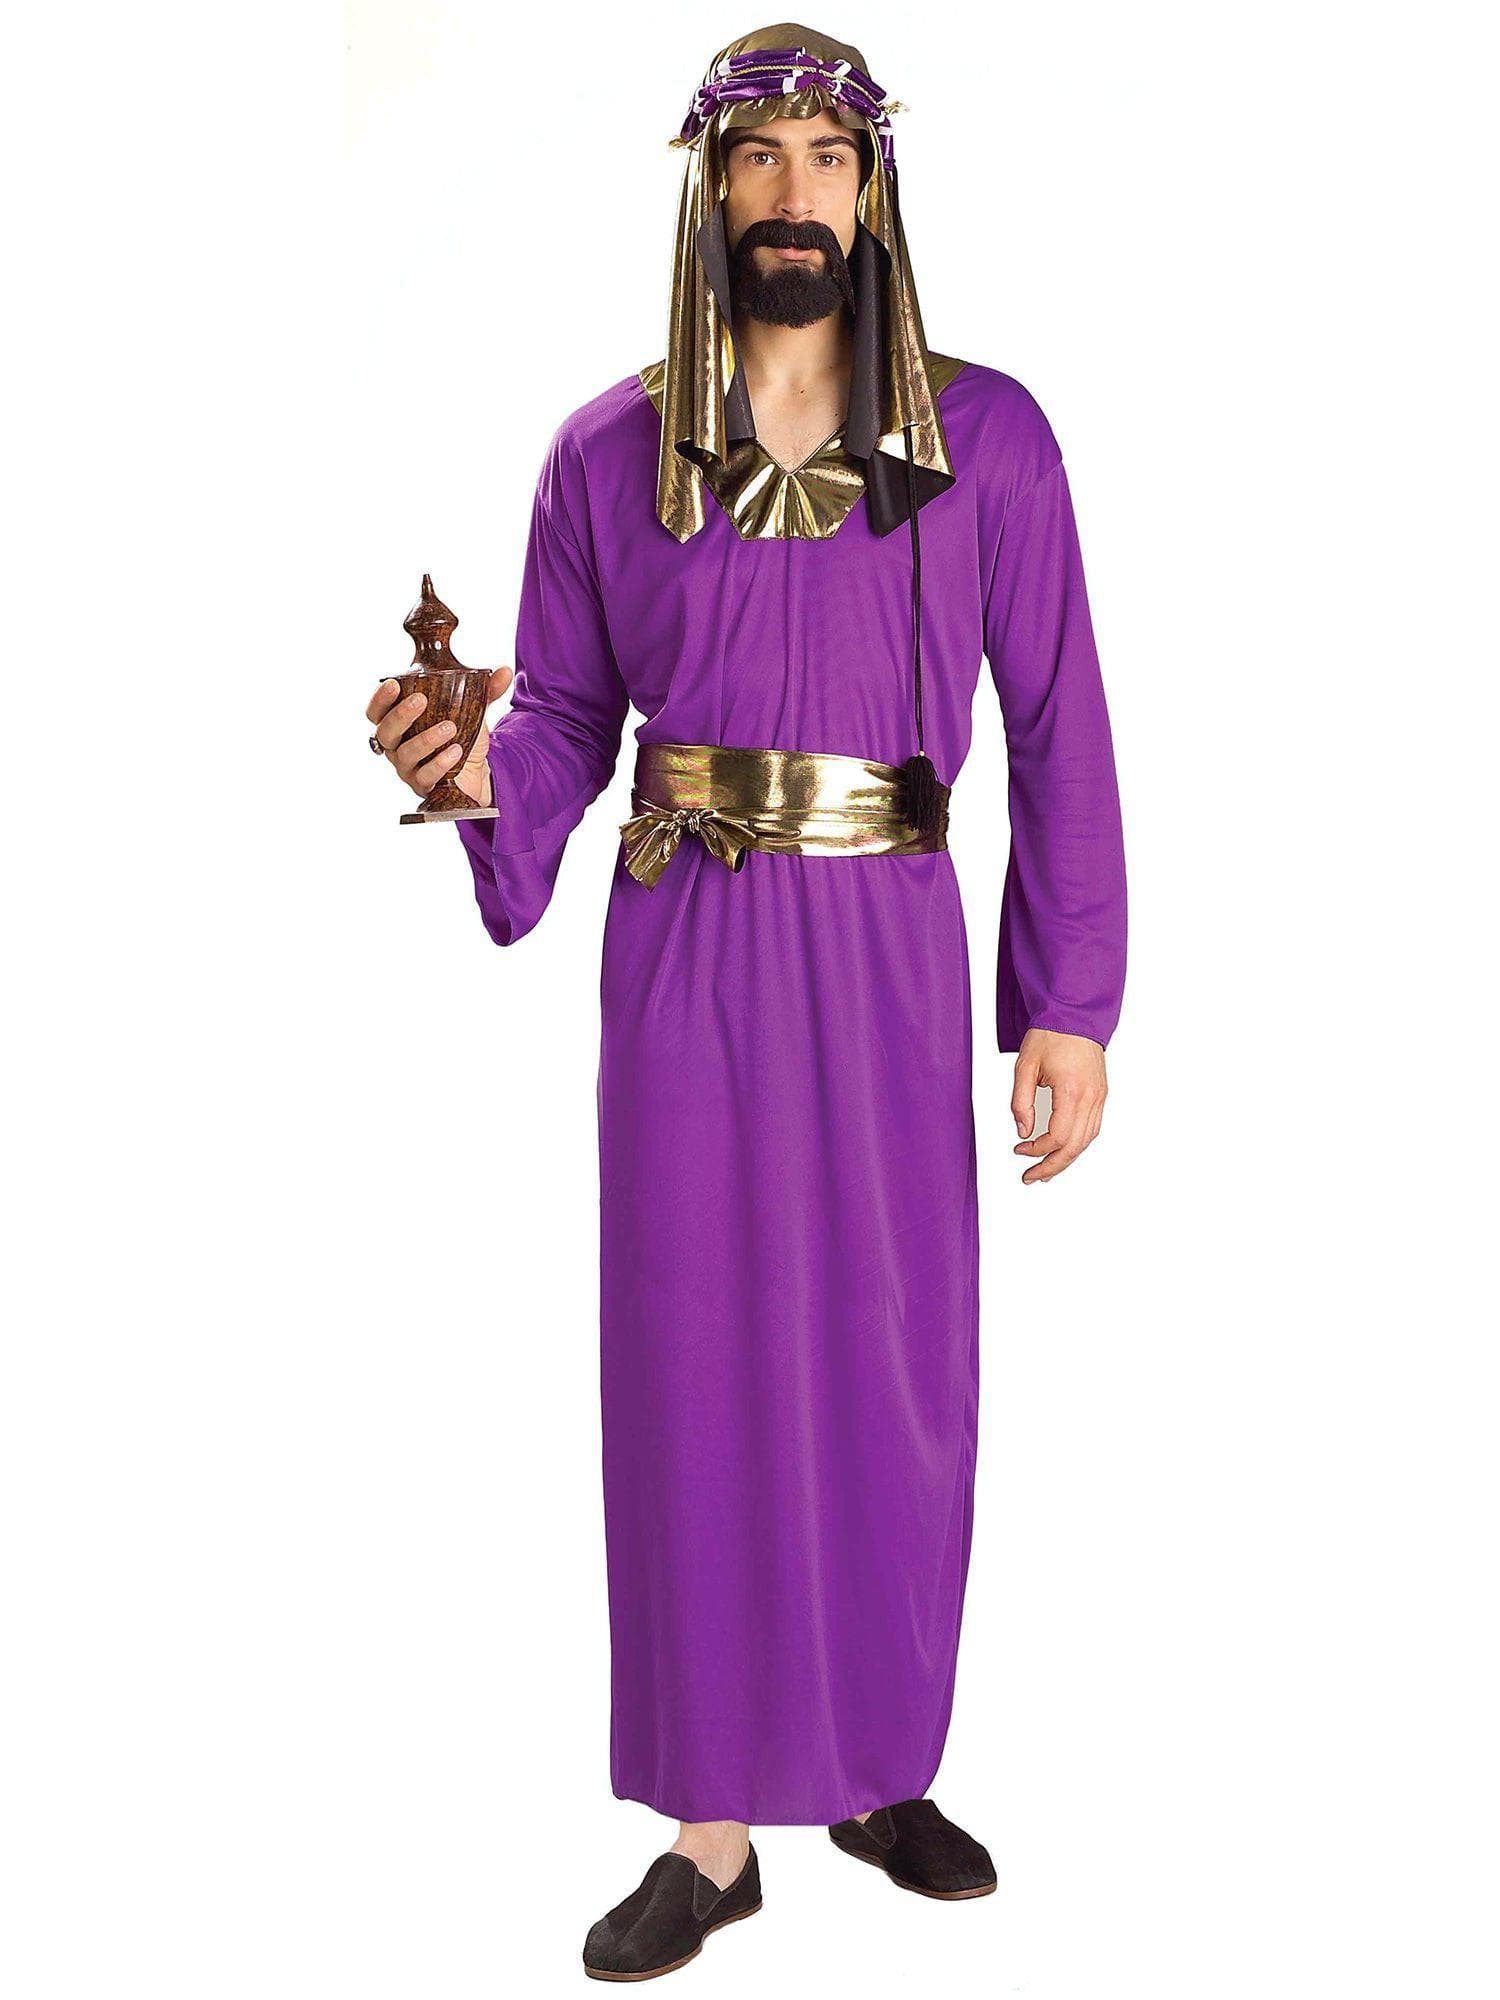 Adult Purple Wiseman Costume - costumes.com